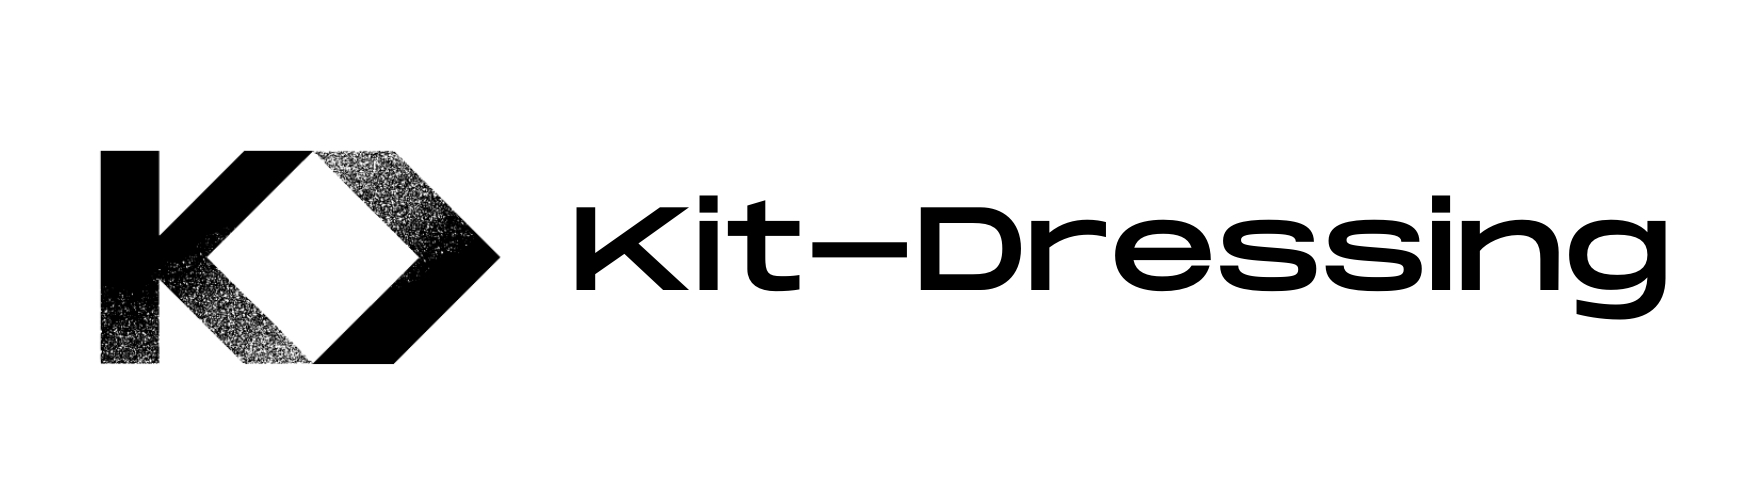 Kit-Dressing